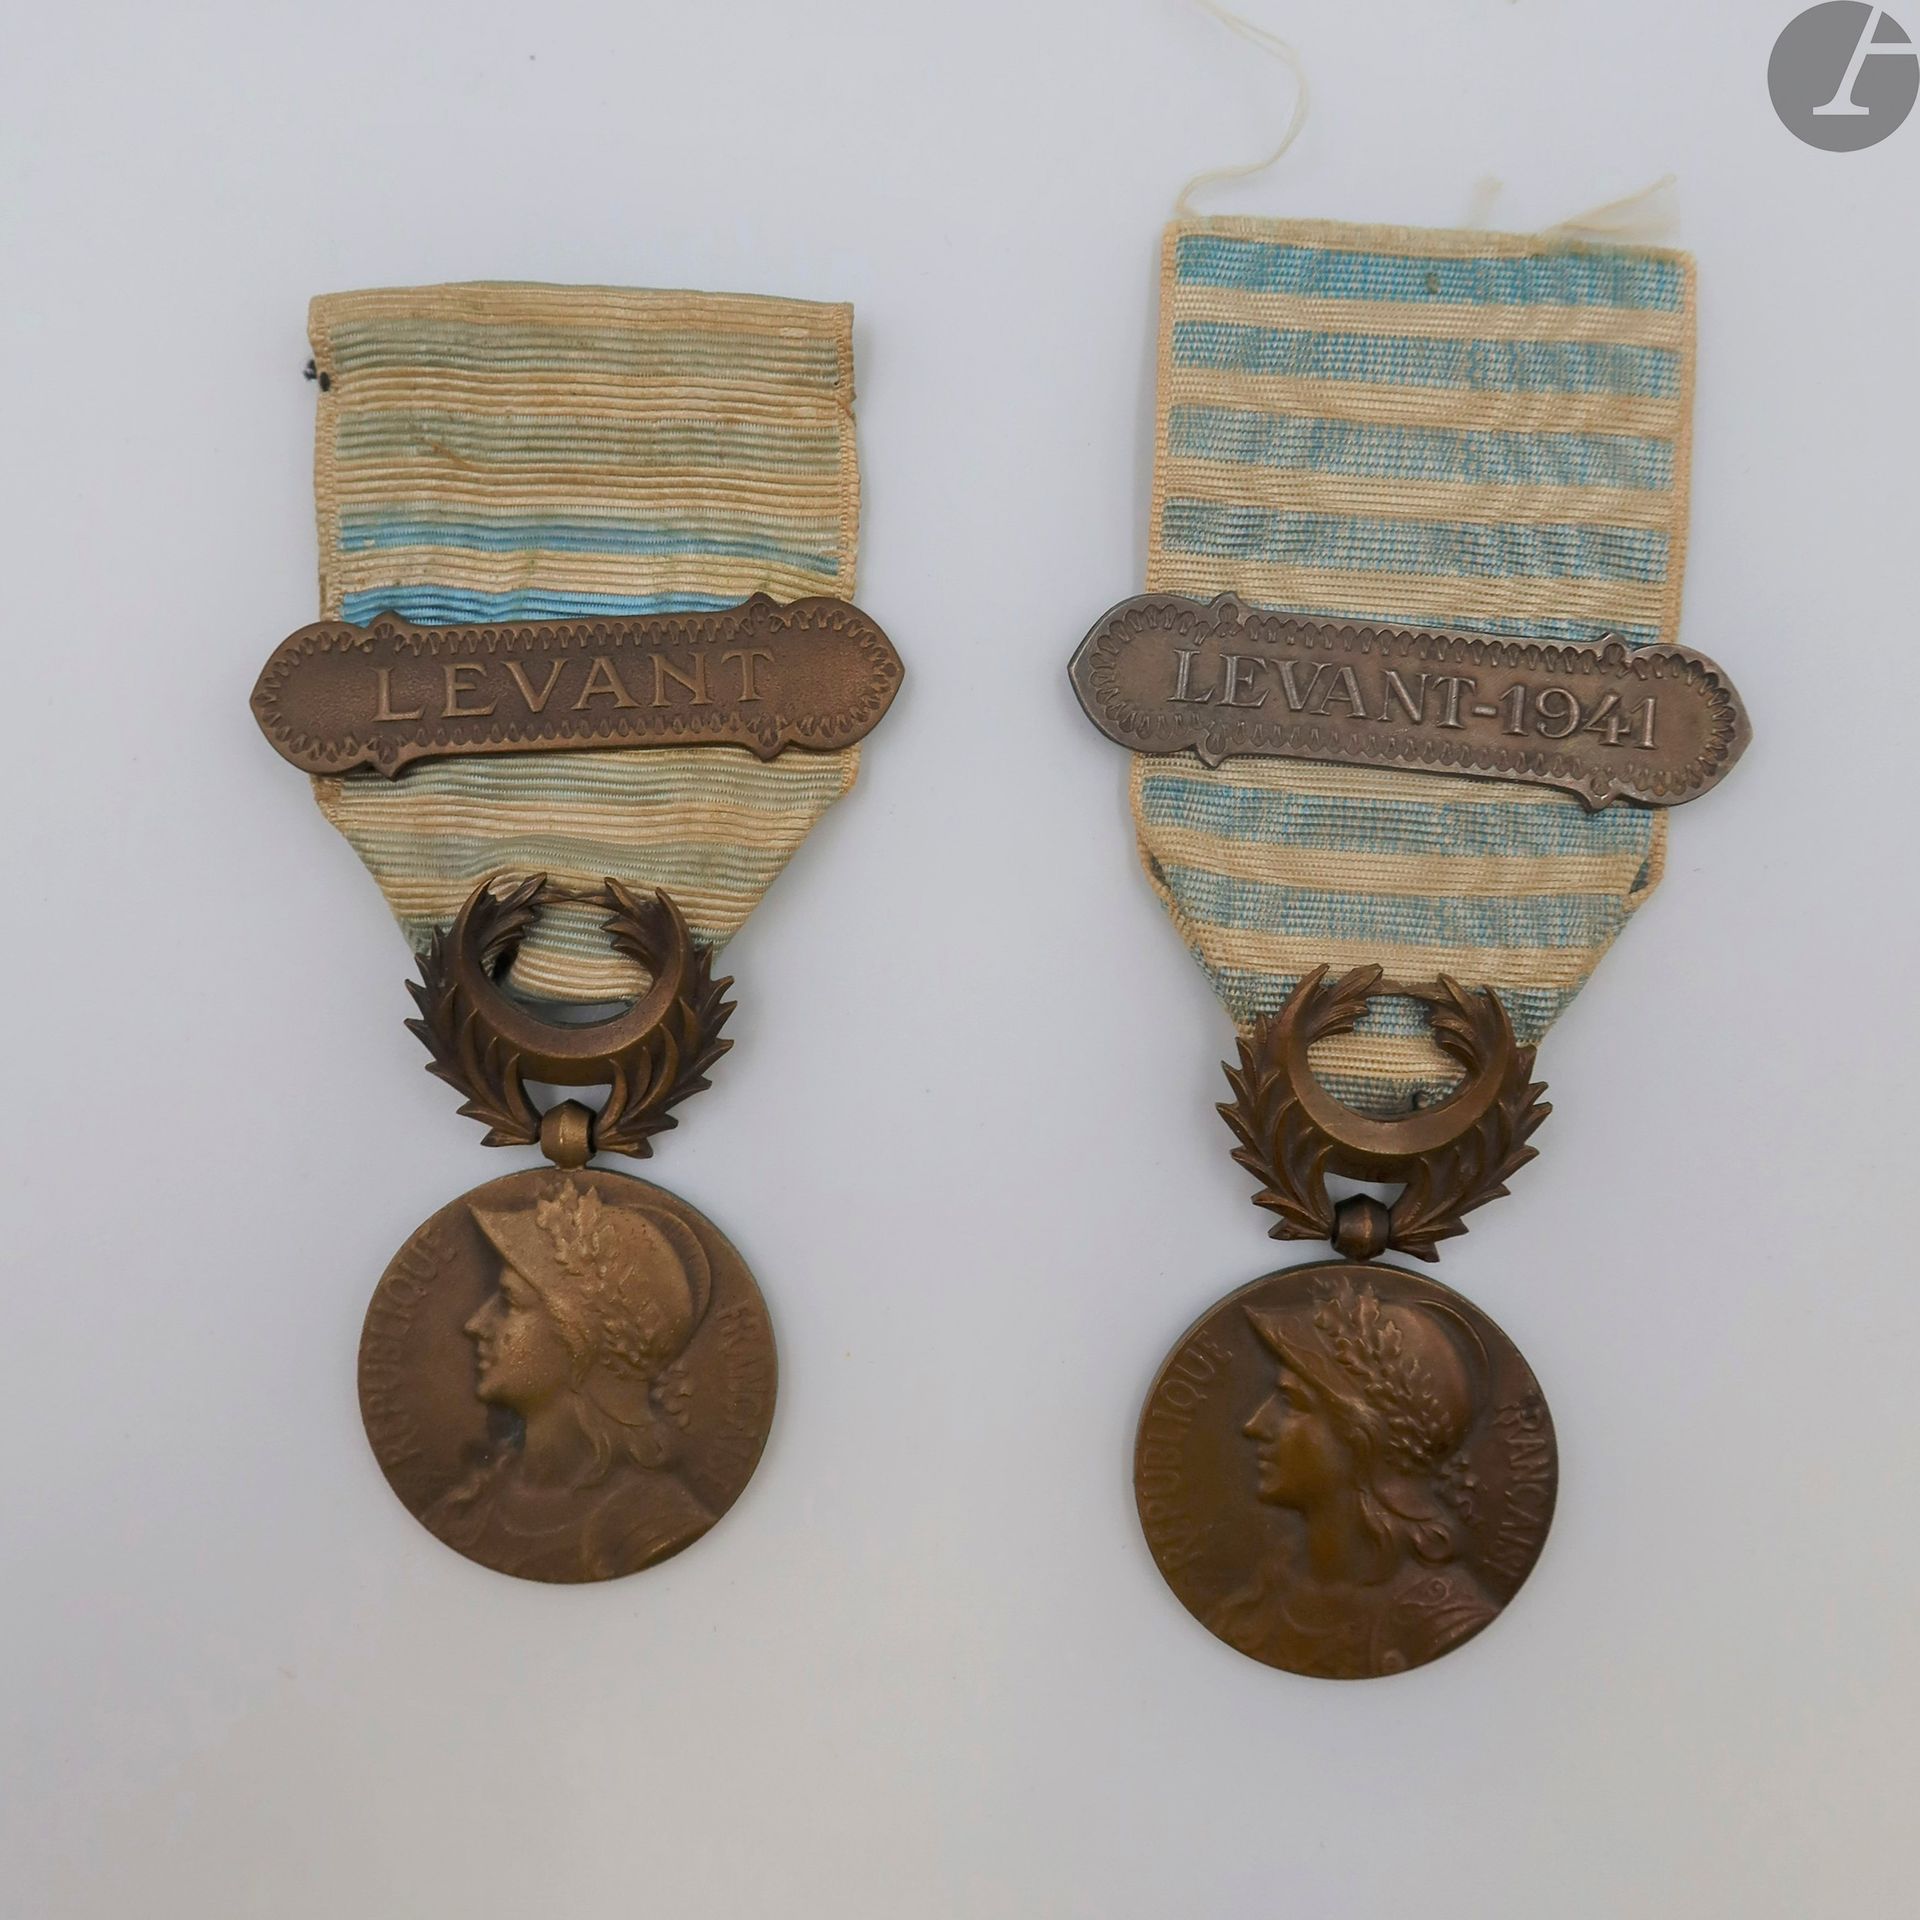 Null 
MEDAGLIA
FRANCESE 
DEL LEVANTE (1922)
Due medaglie in bronzo:
- patina scu&hellip;